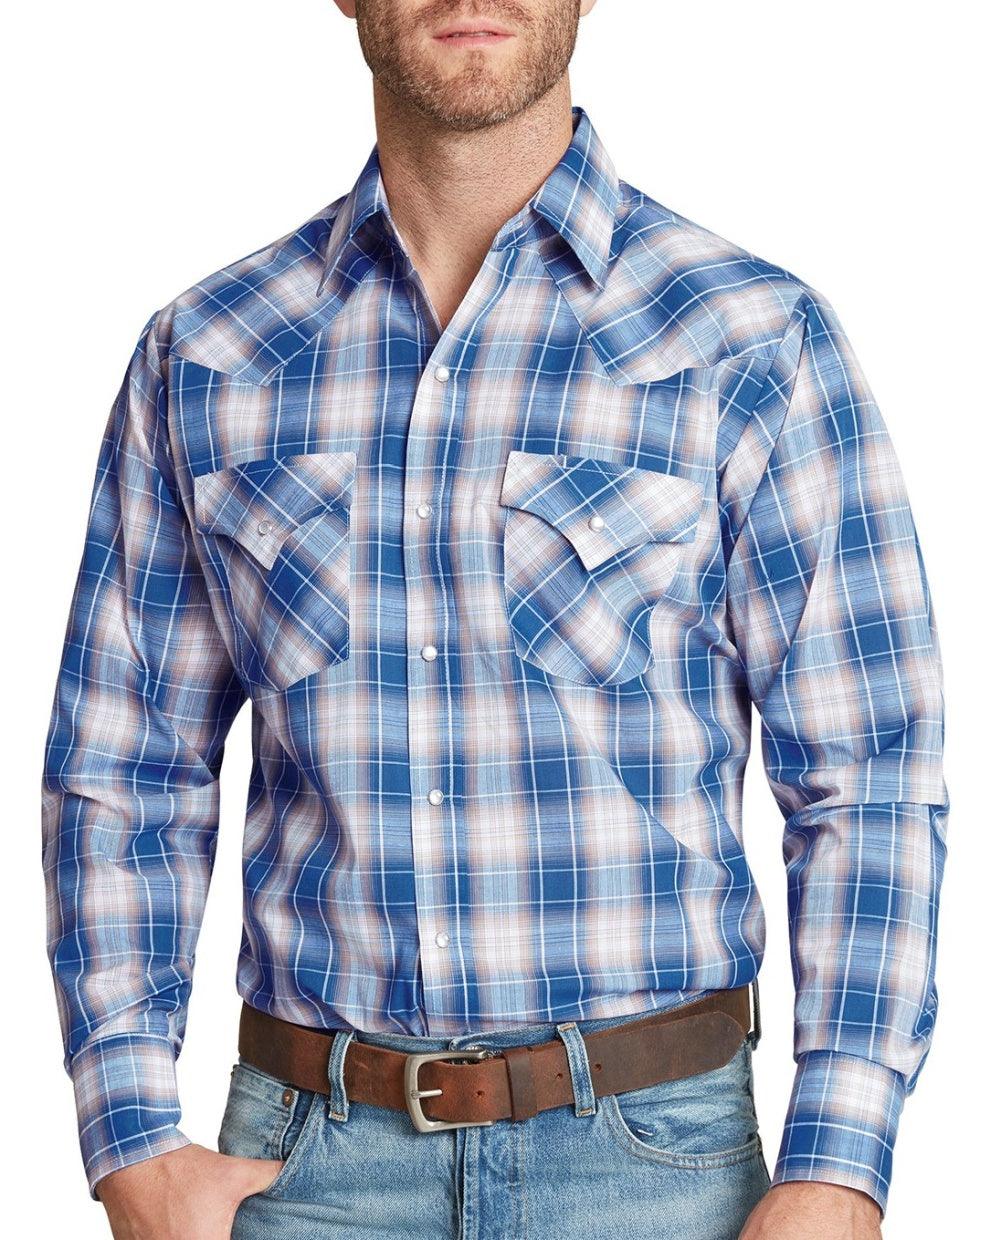 Ely Cattleman Blue Plaid Long Sleeve Western Shirt - Flyclothing LLC